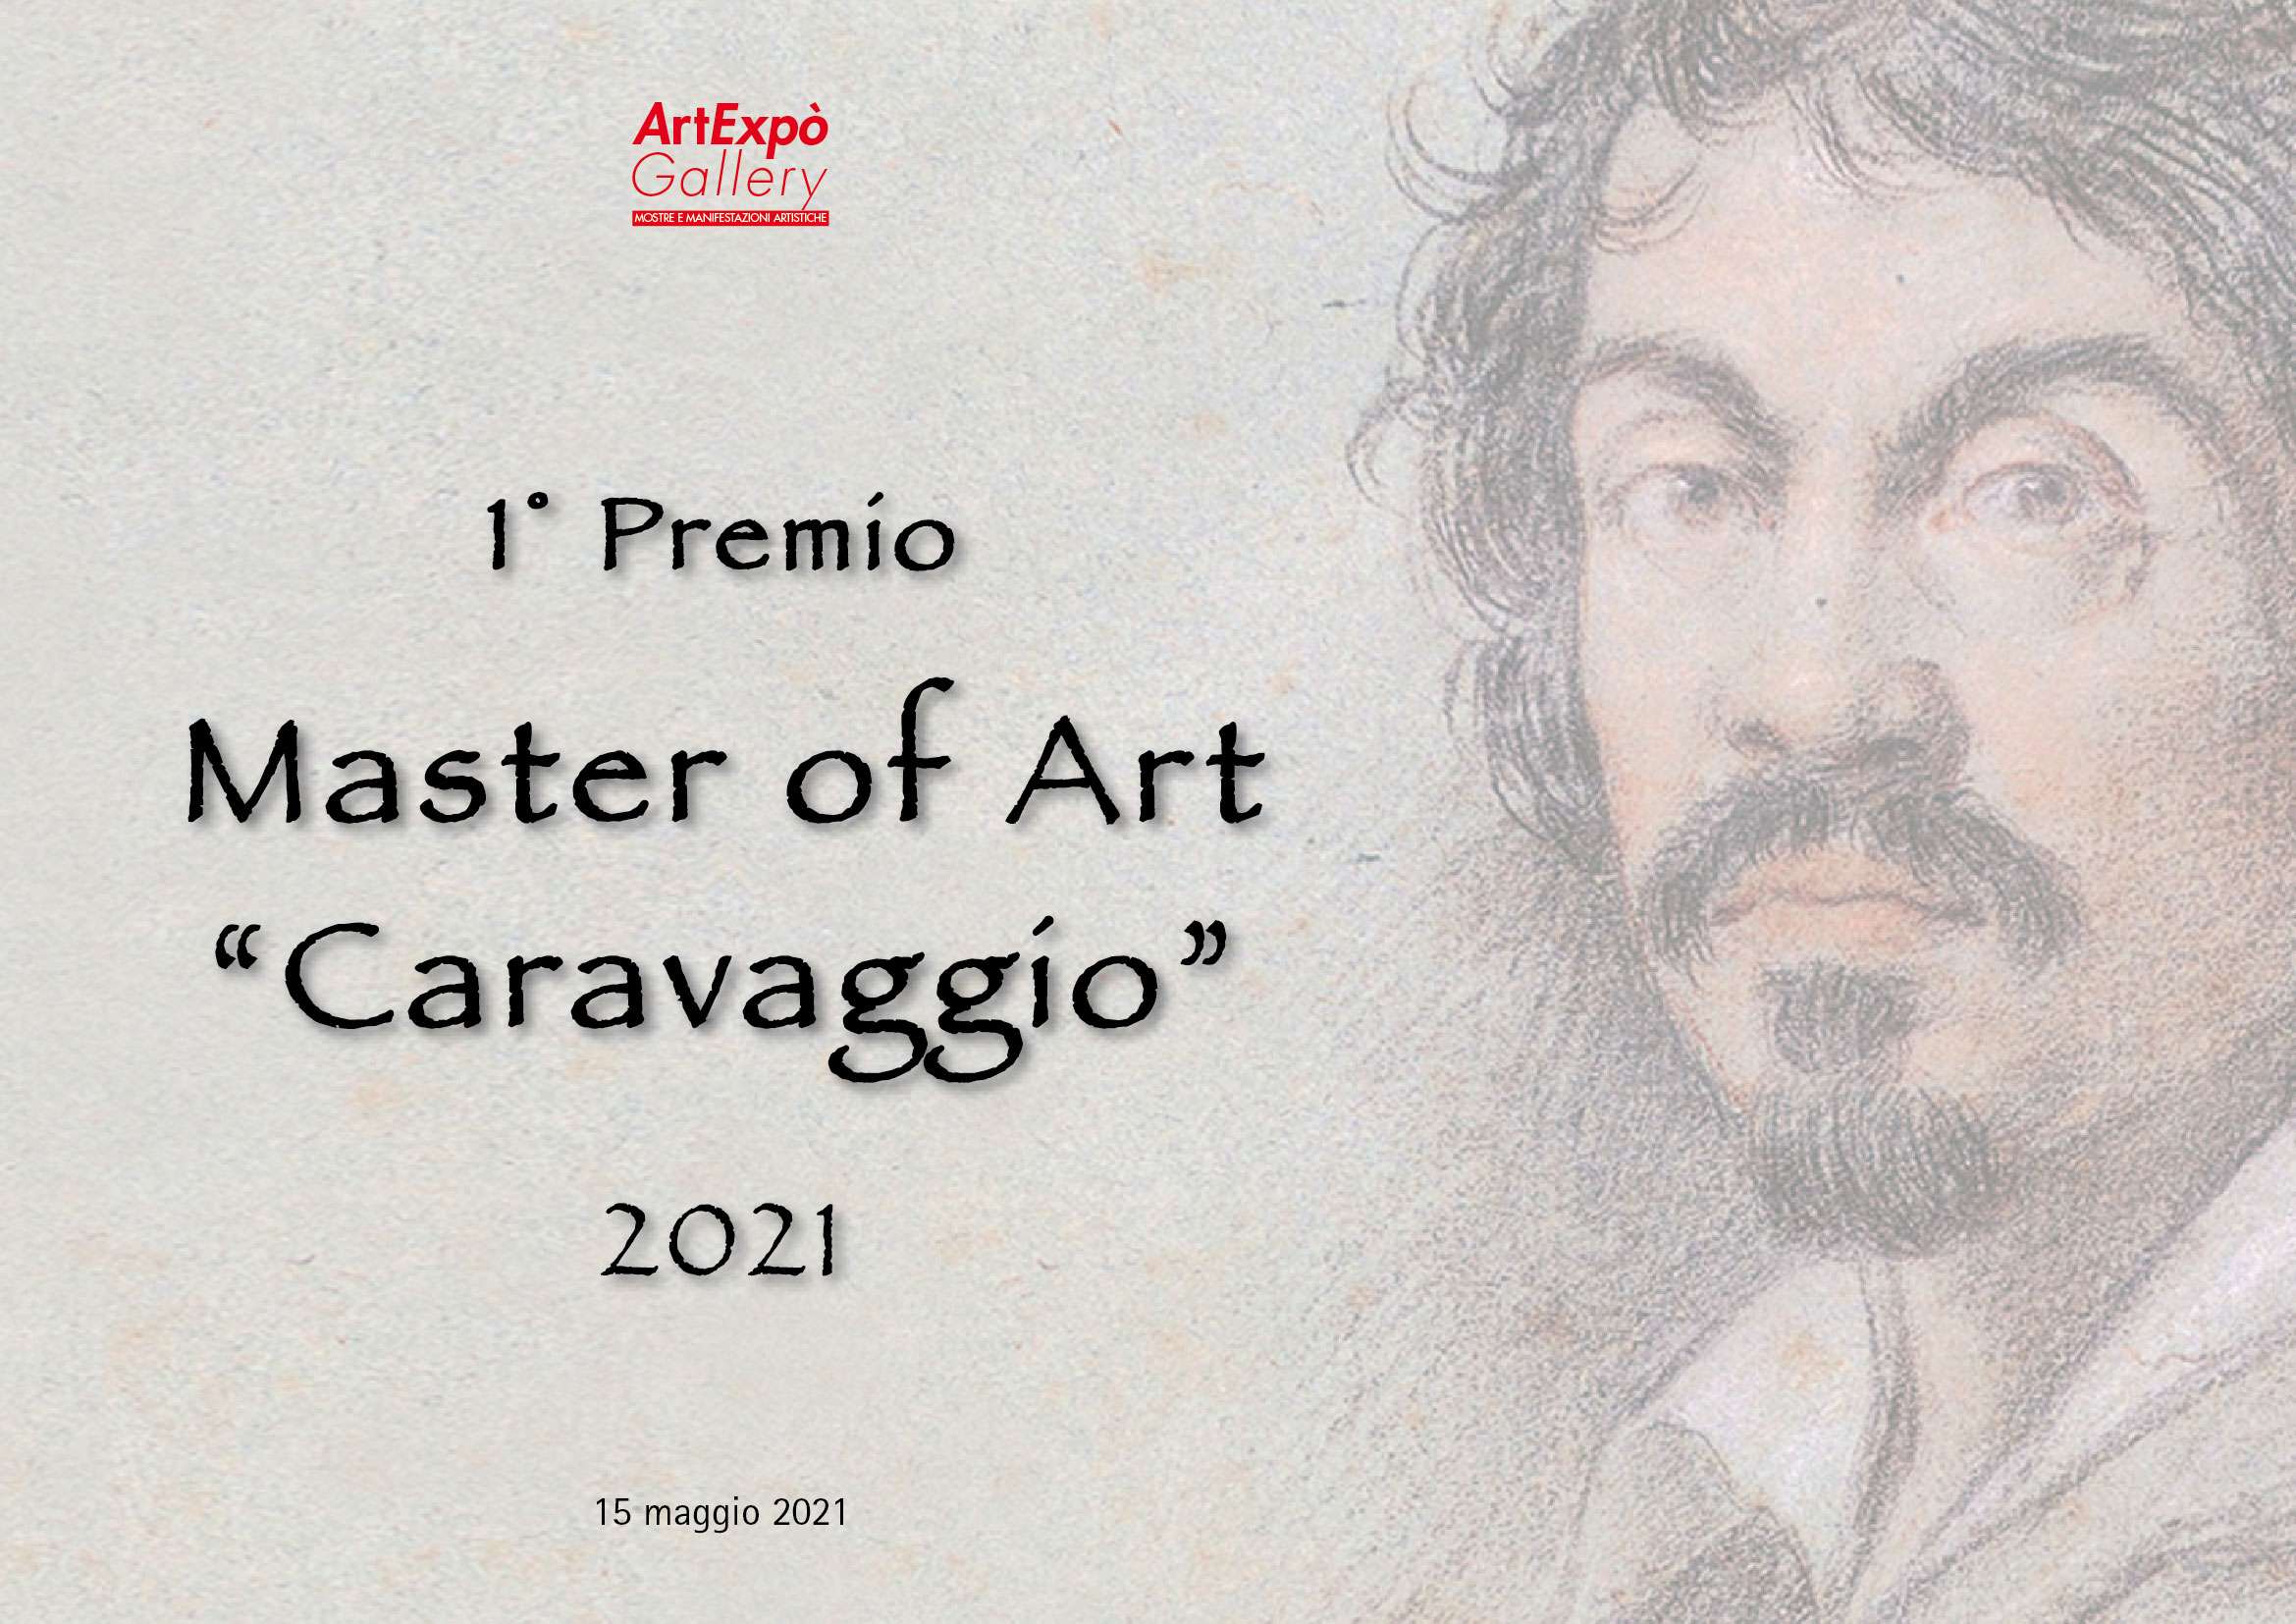 Master of Art “Caravaggio”